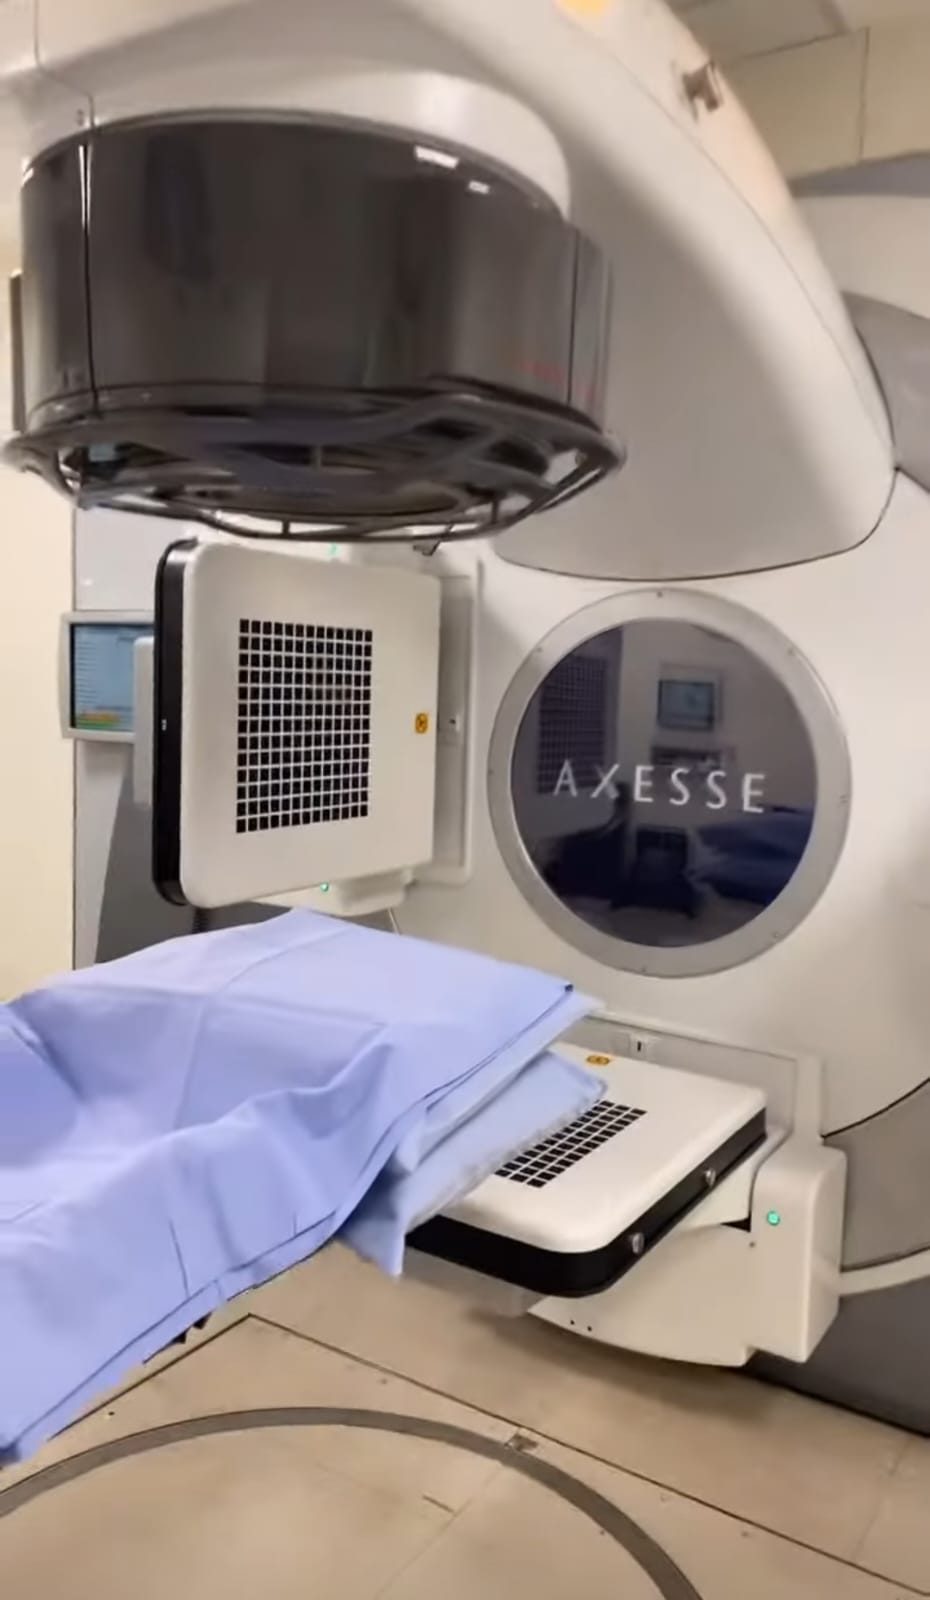 Simony mostra máquina de radioterapia - Instagram